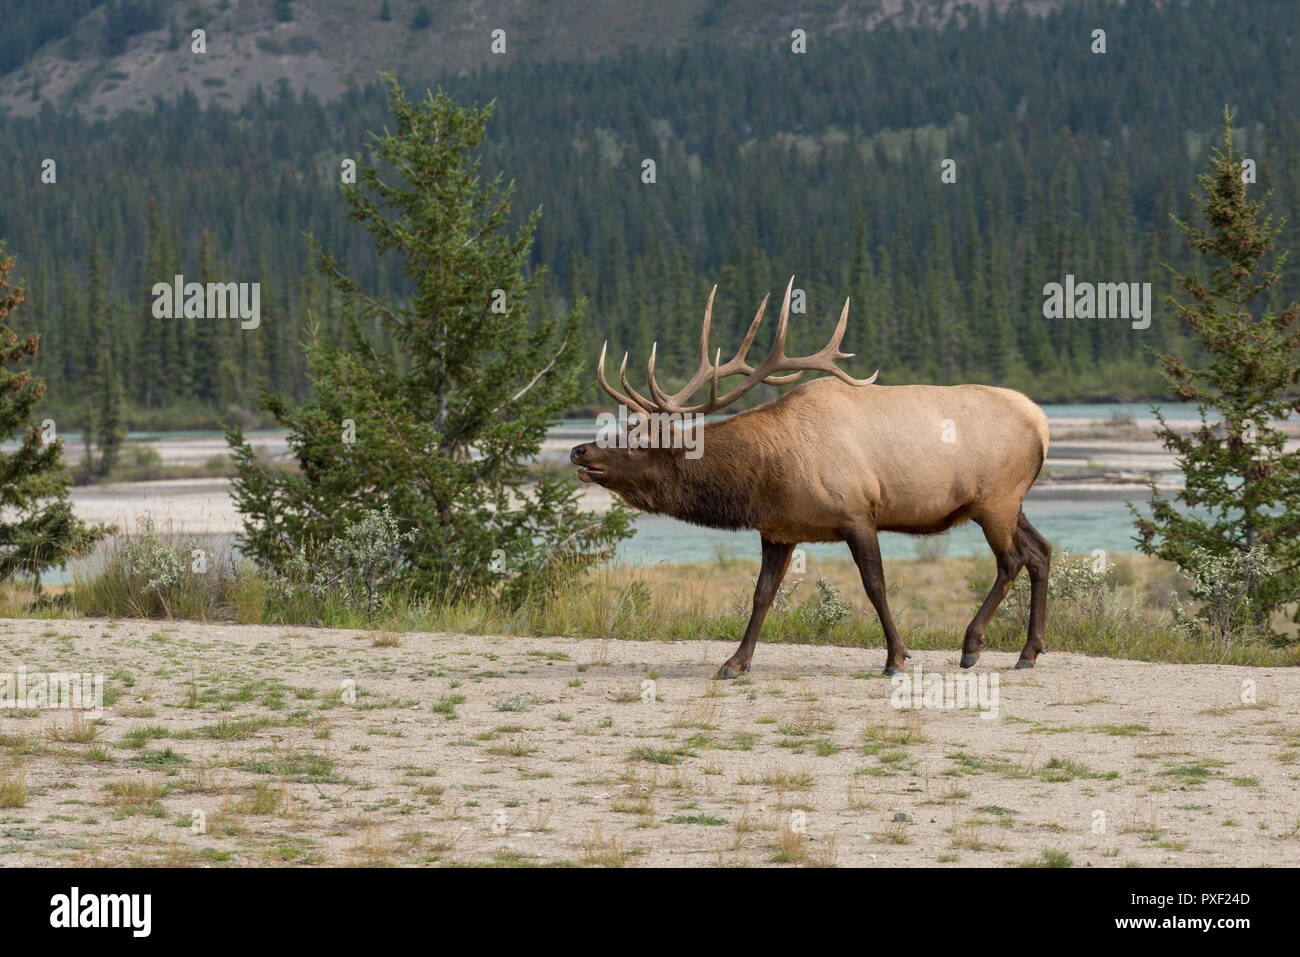 A large bull elk posturing Stock Photo